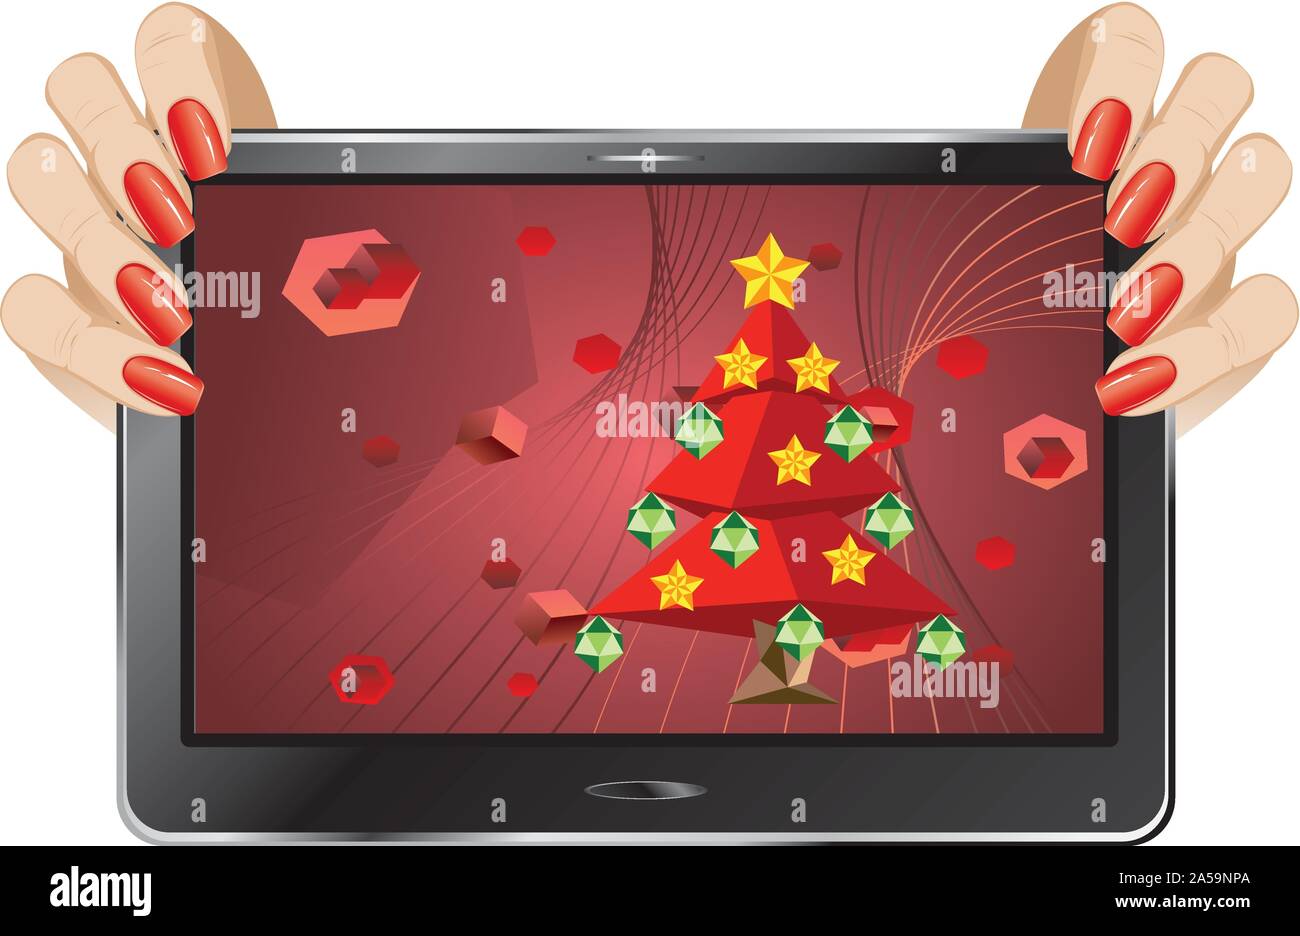 Happy new year or merry Christmas greetings on digital display. Stock Vector